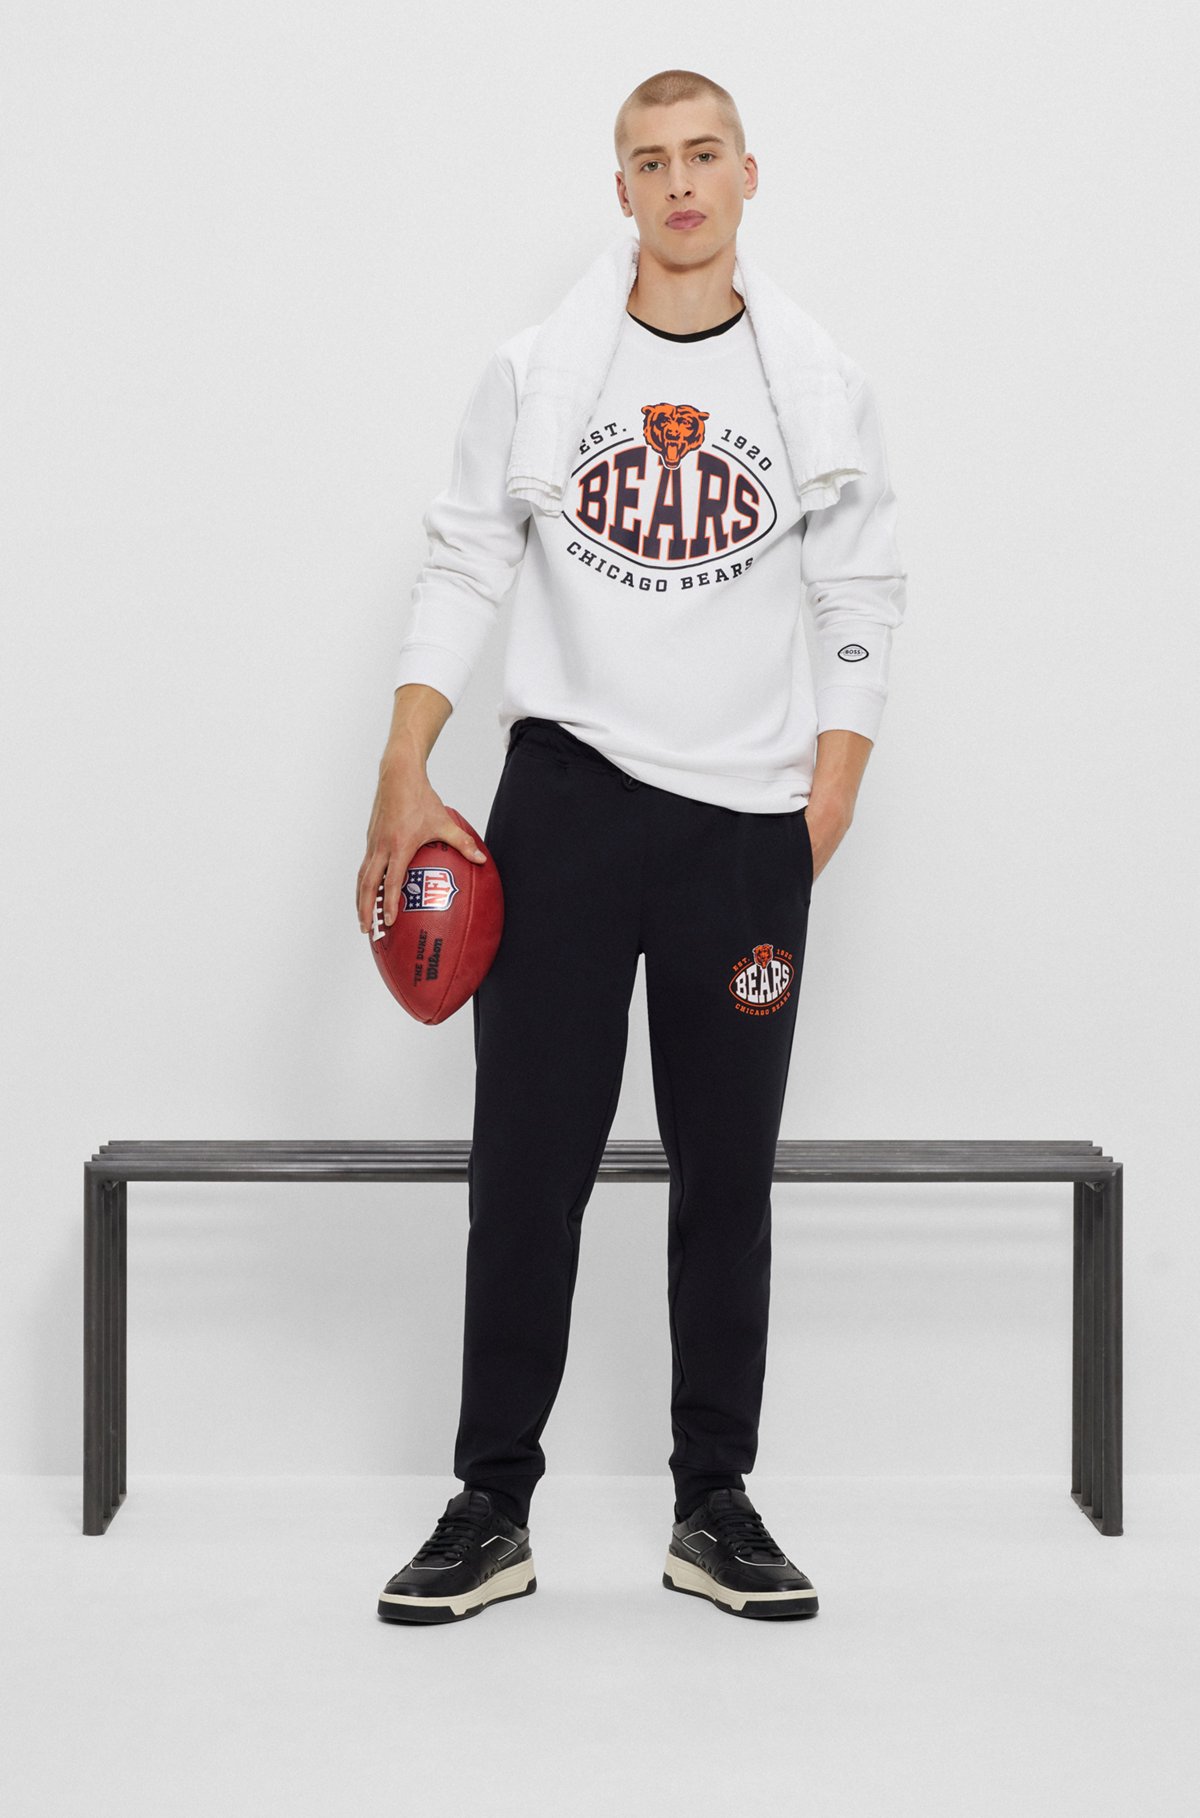 BOSS x NFL cotton-blend sweatshirt with collaborative branding, Bears